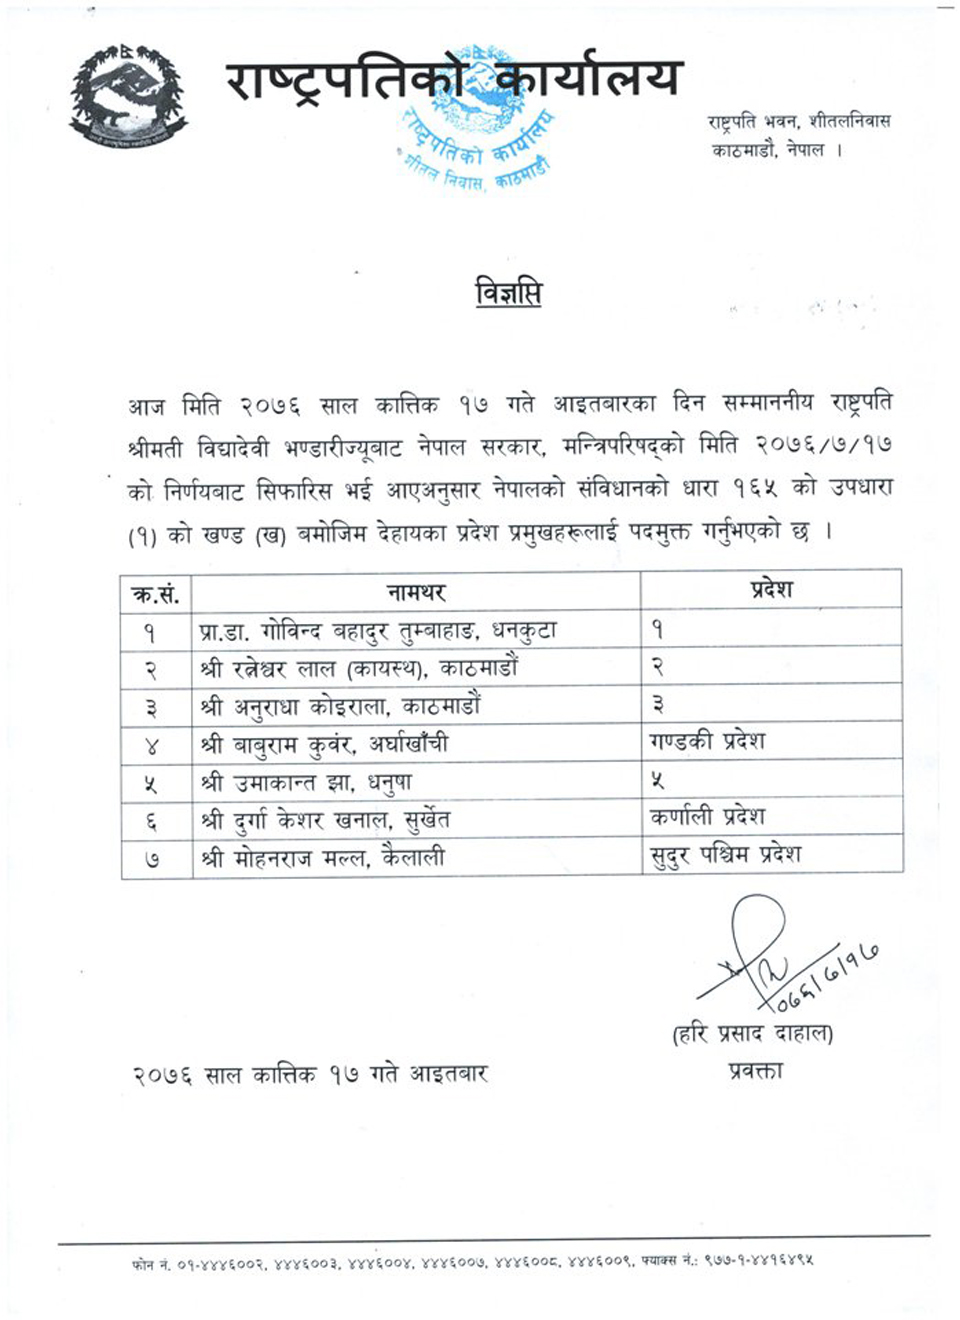 President Bhandari sacks all 7 governors